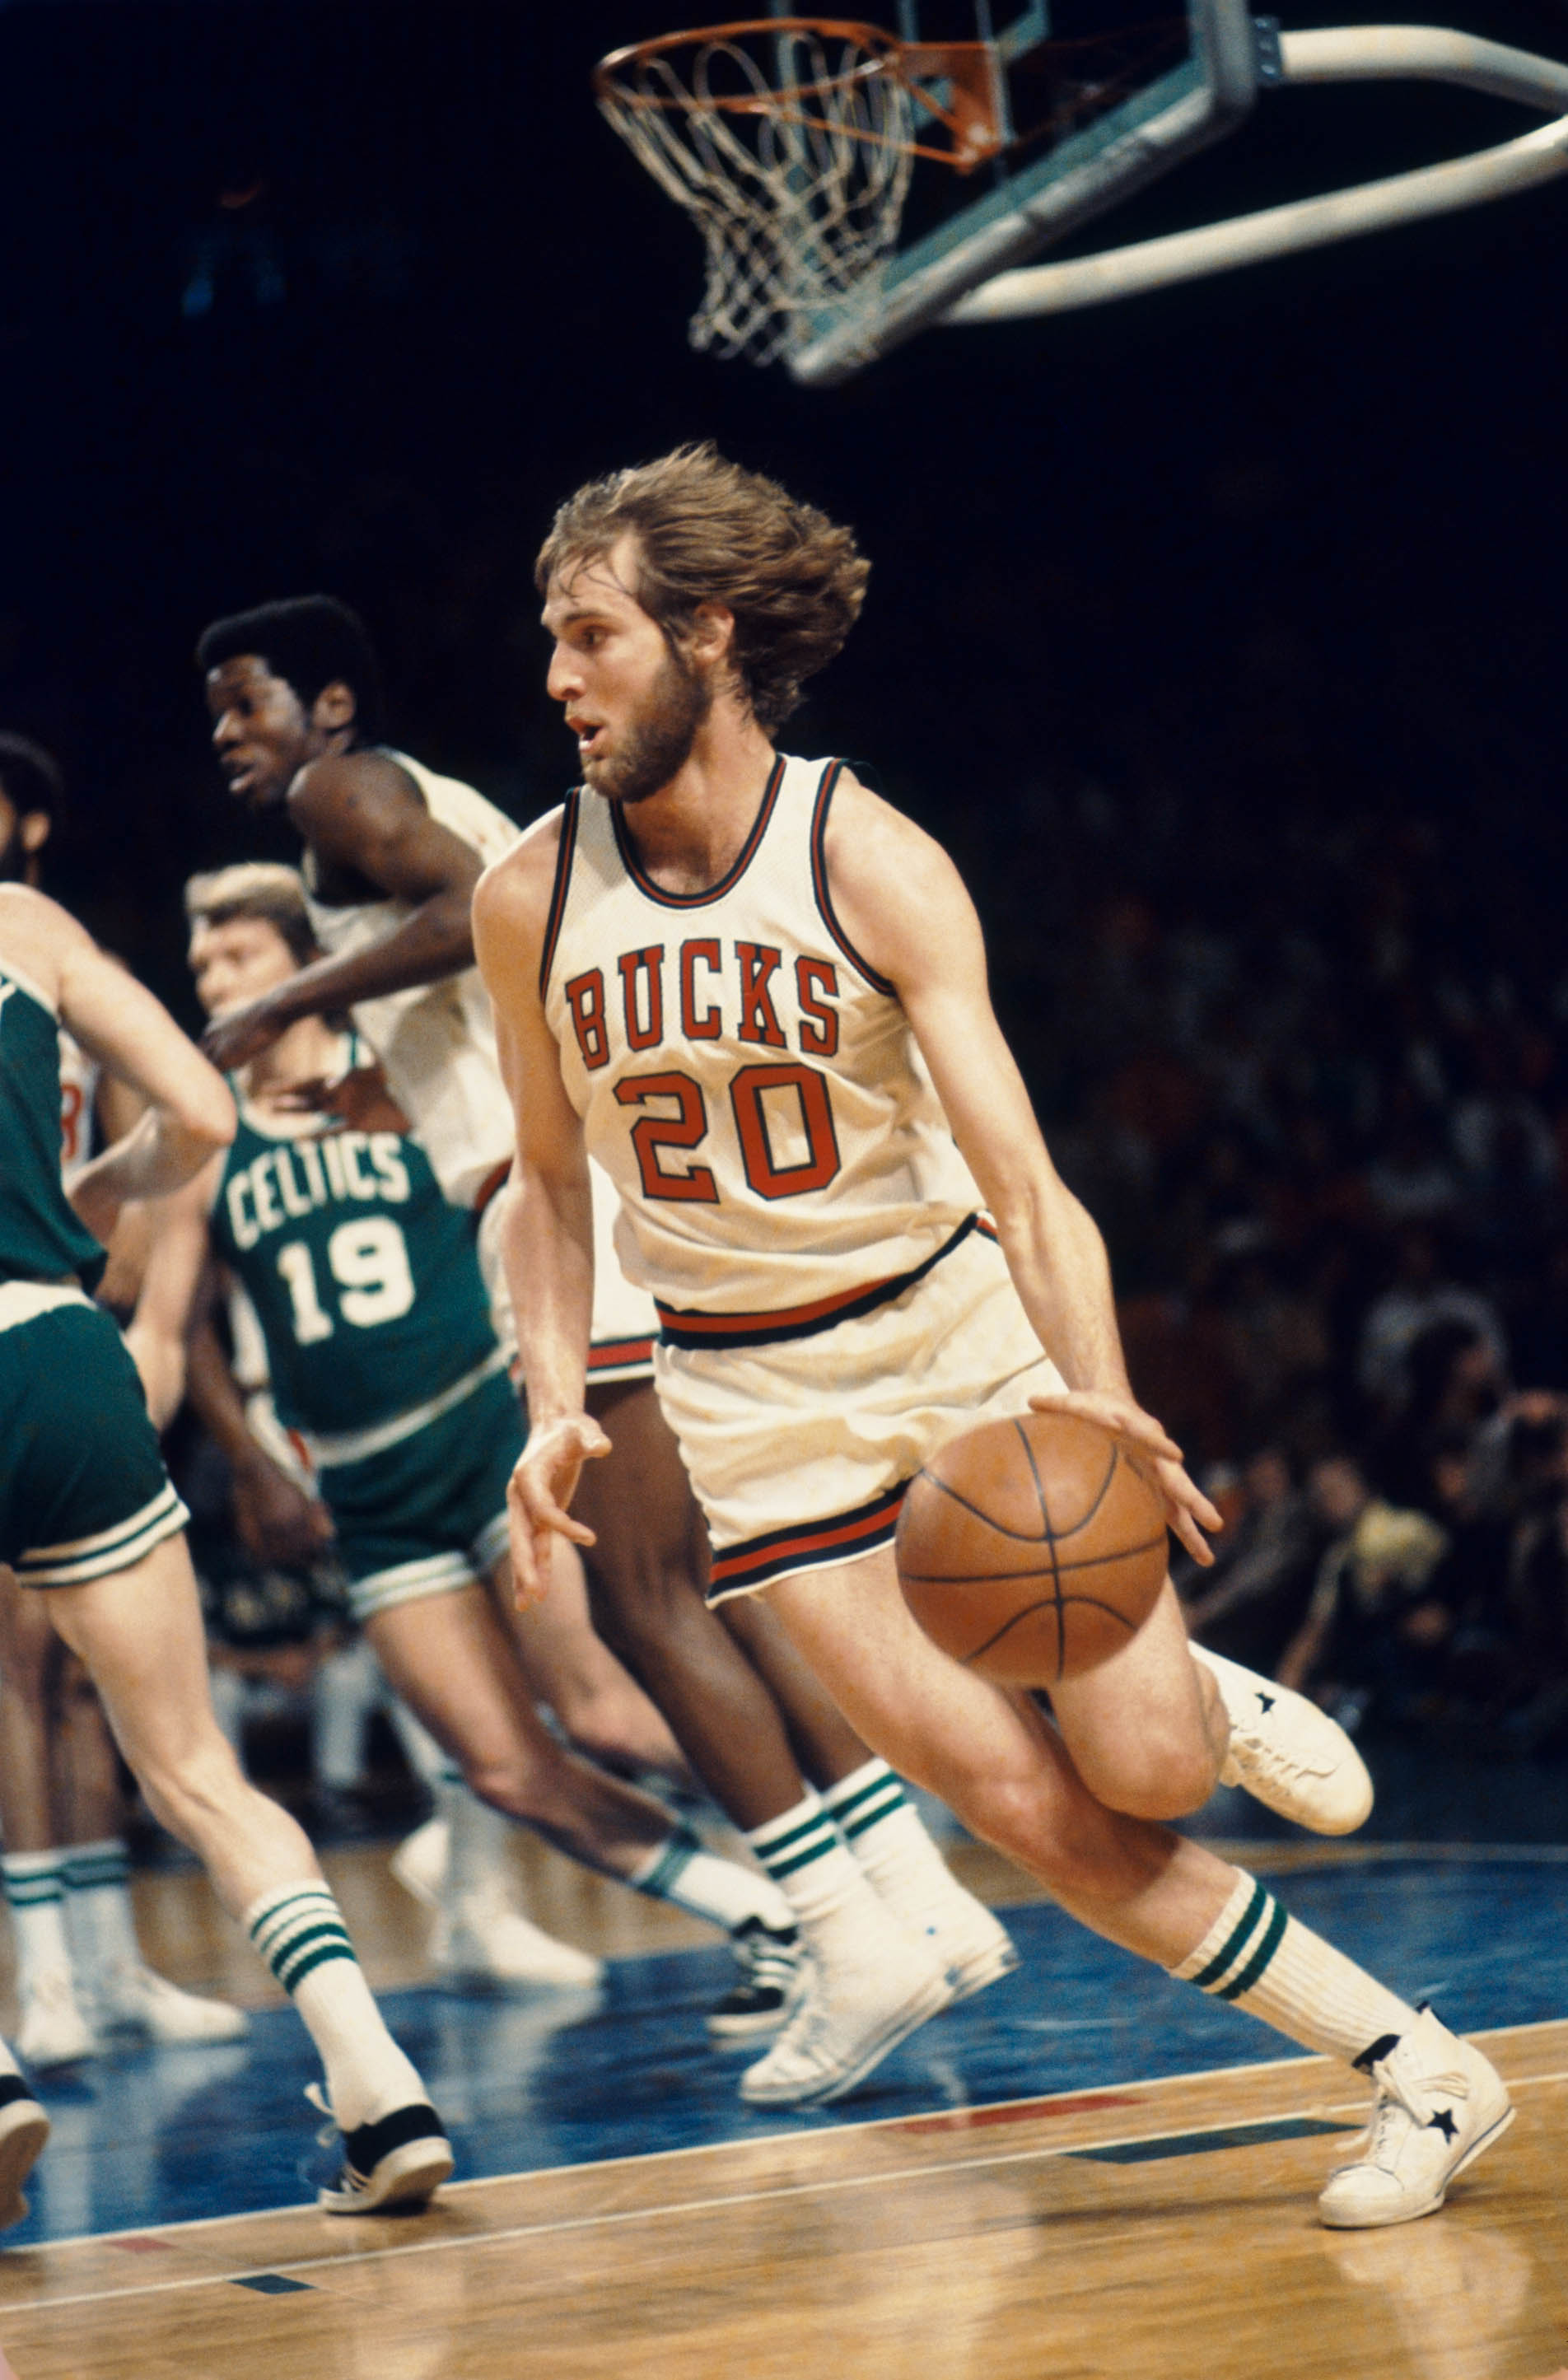 Jon McGlocklin talks 1974 NBA Finals, current Bucks team